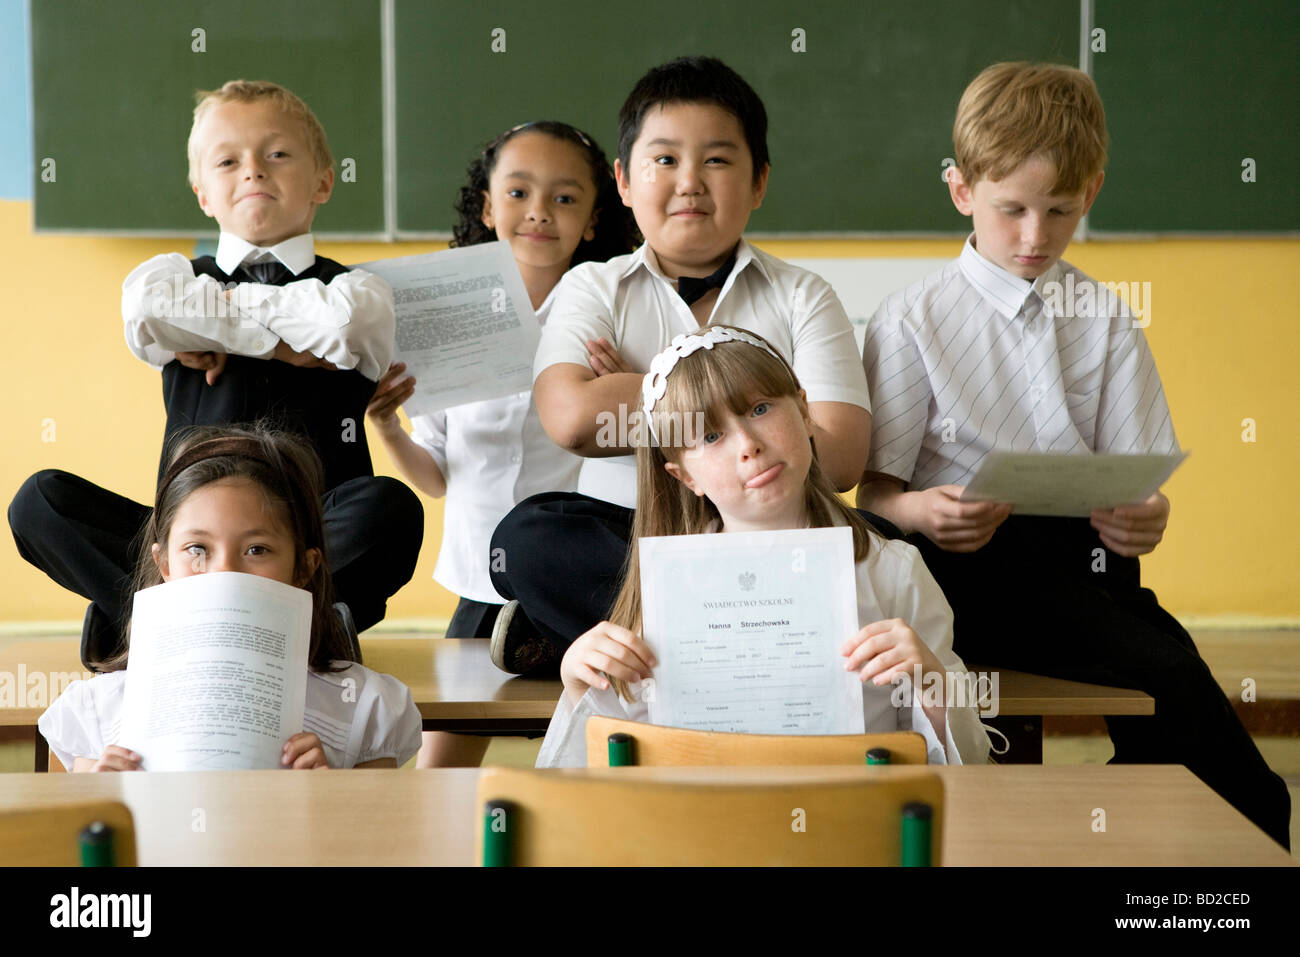 Children with school reports Stock Photo